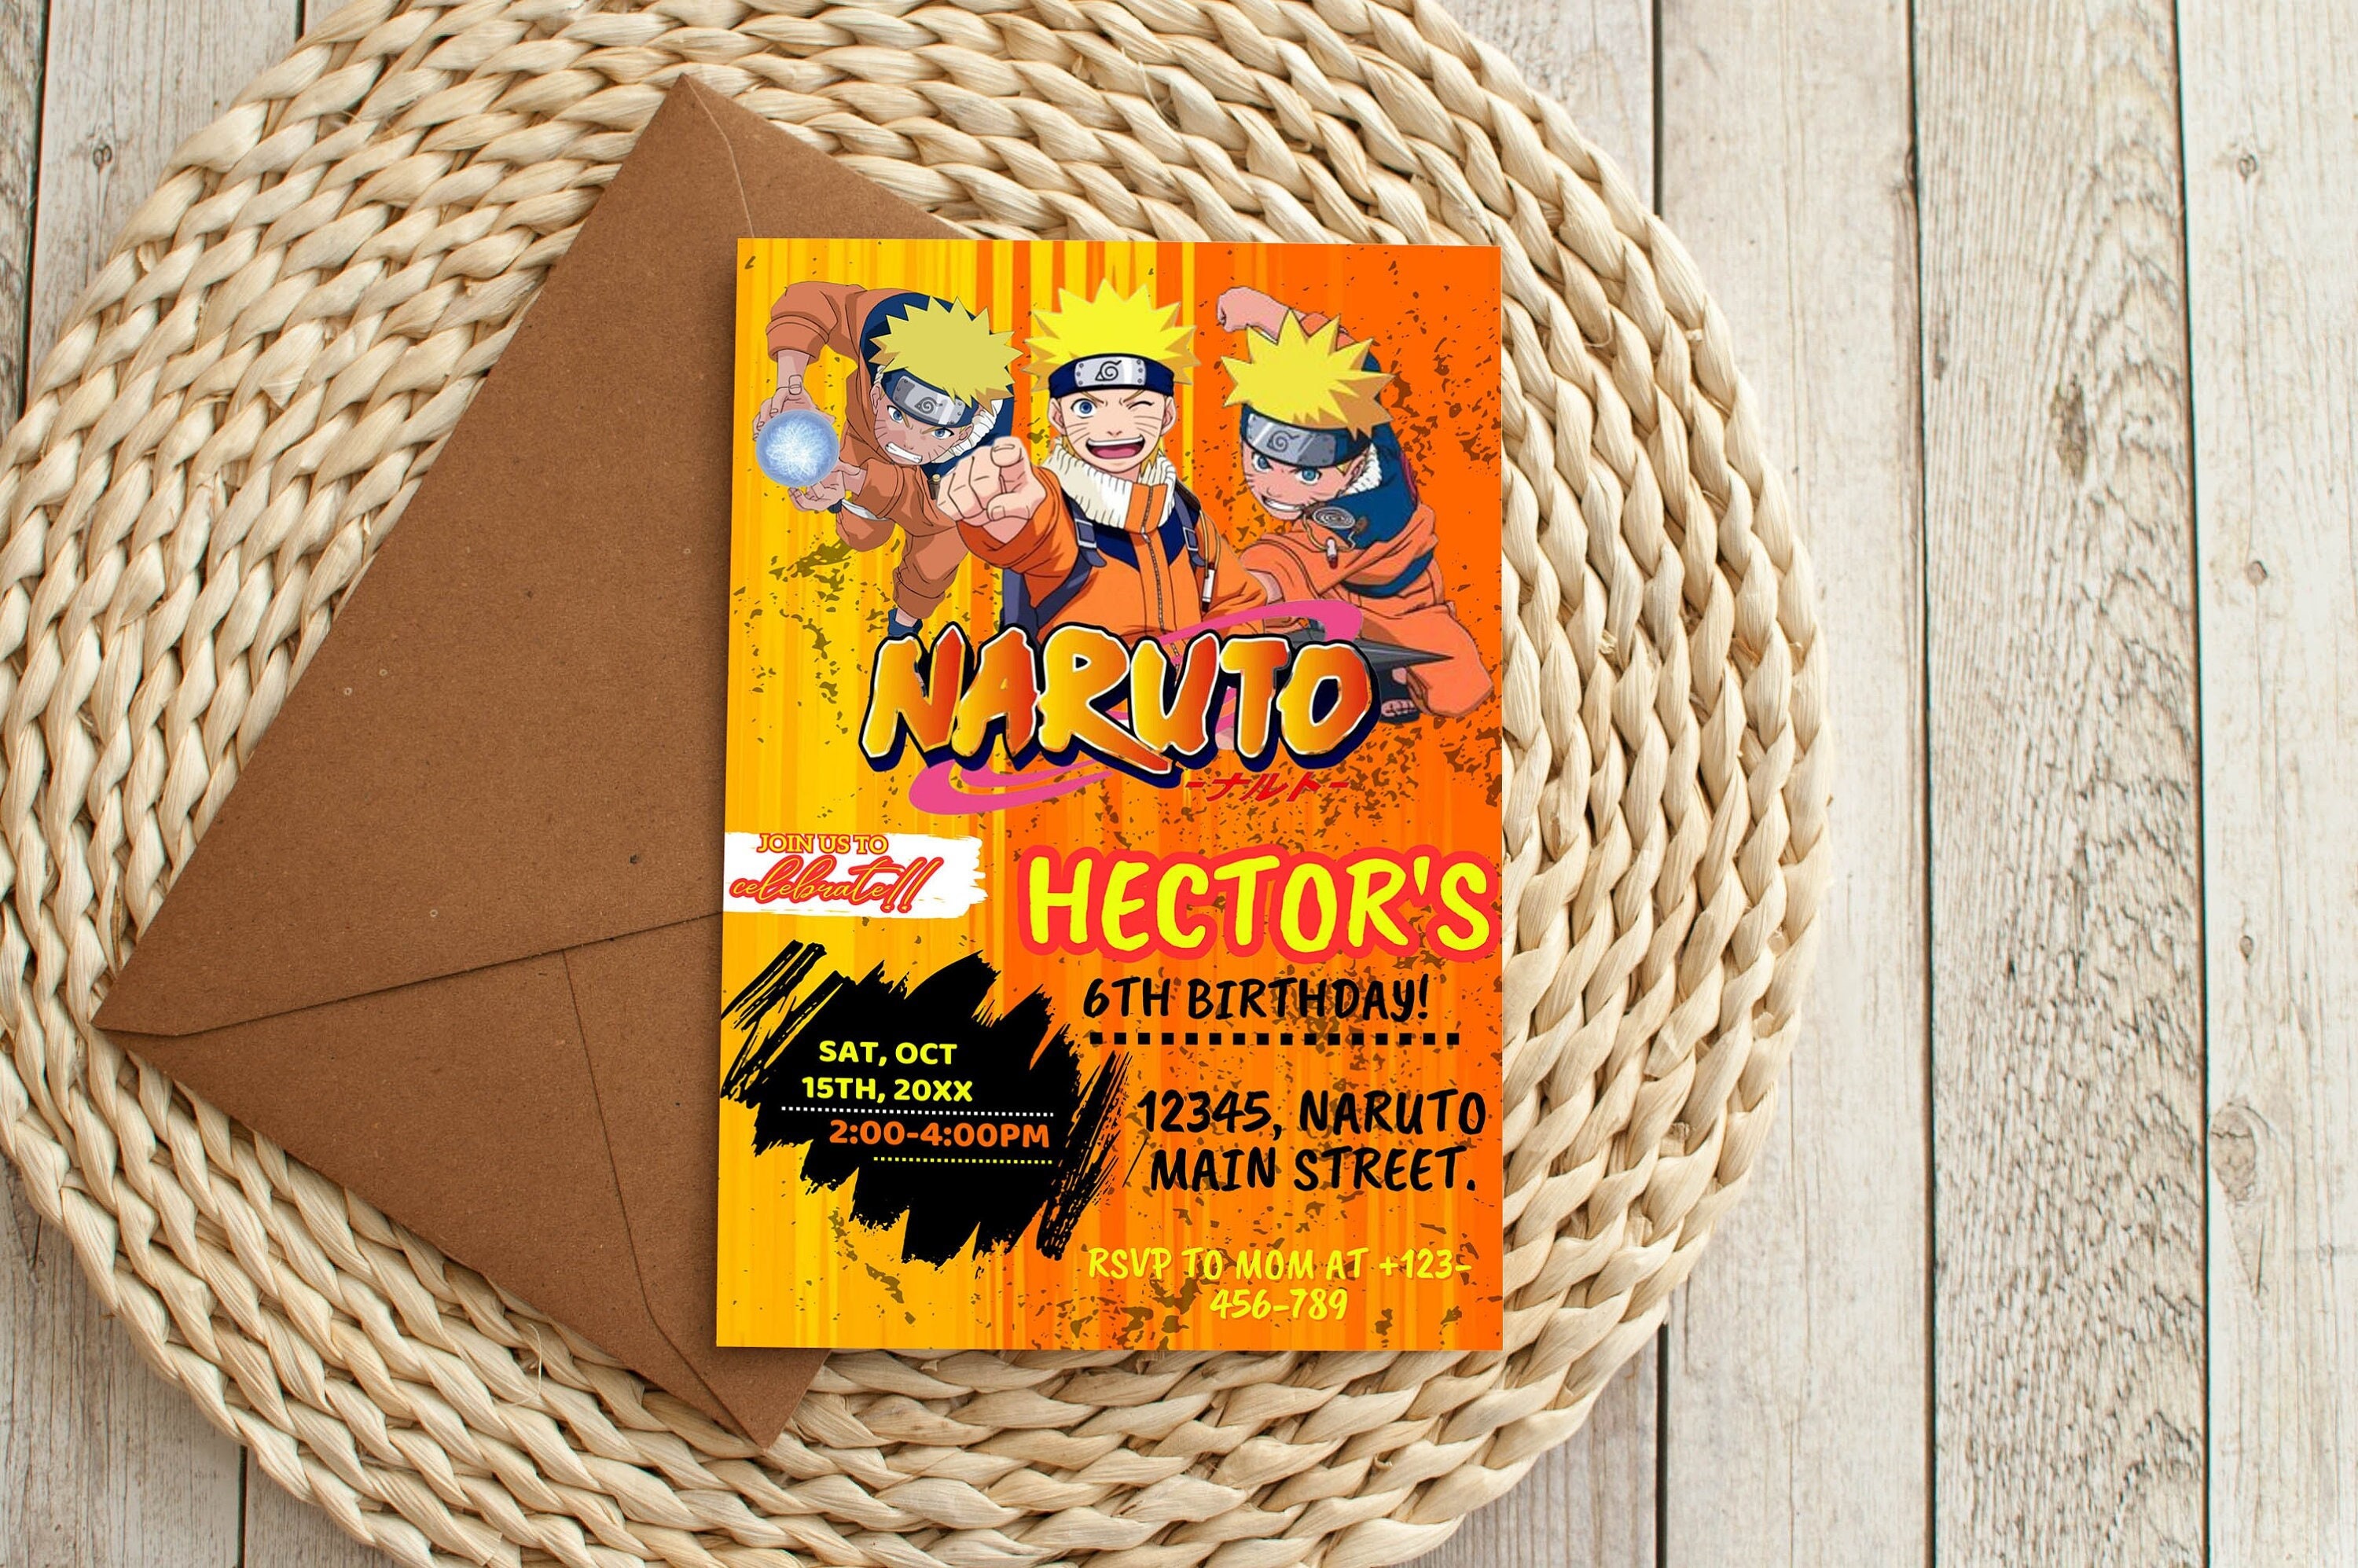 10 BEST] Invitations Naruto, DIGITAL, WHATSAPP